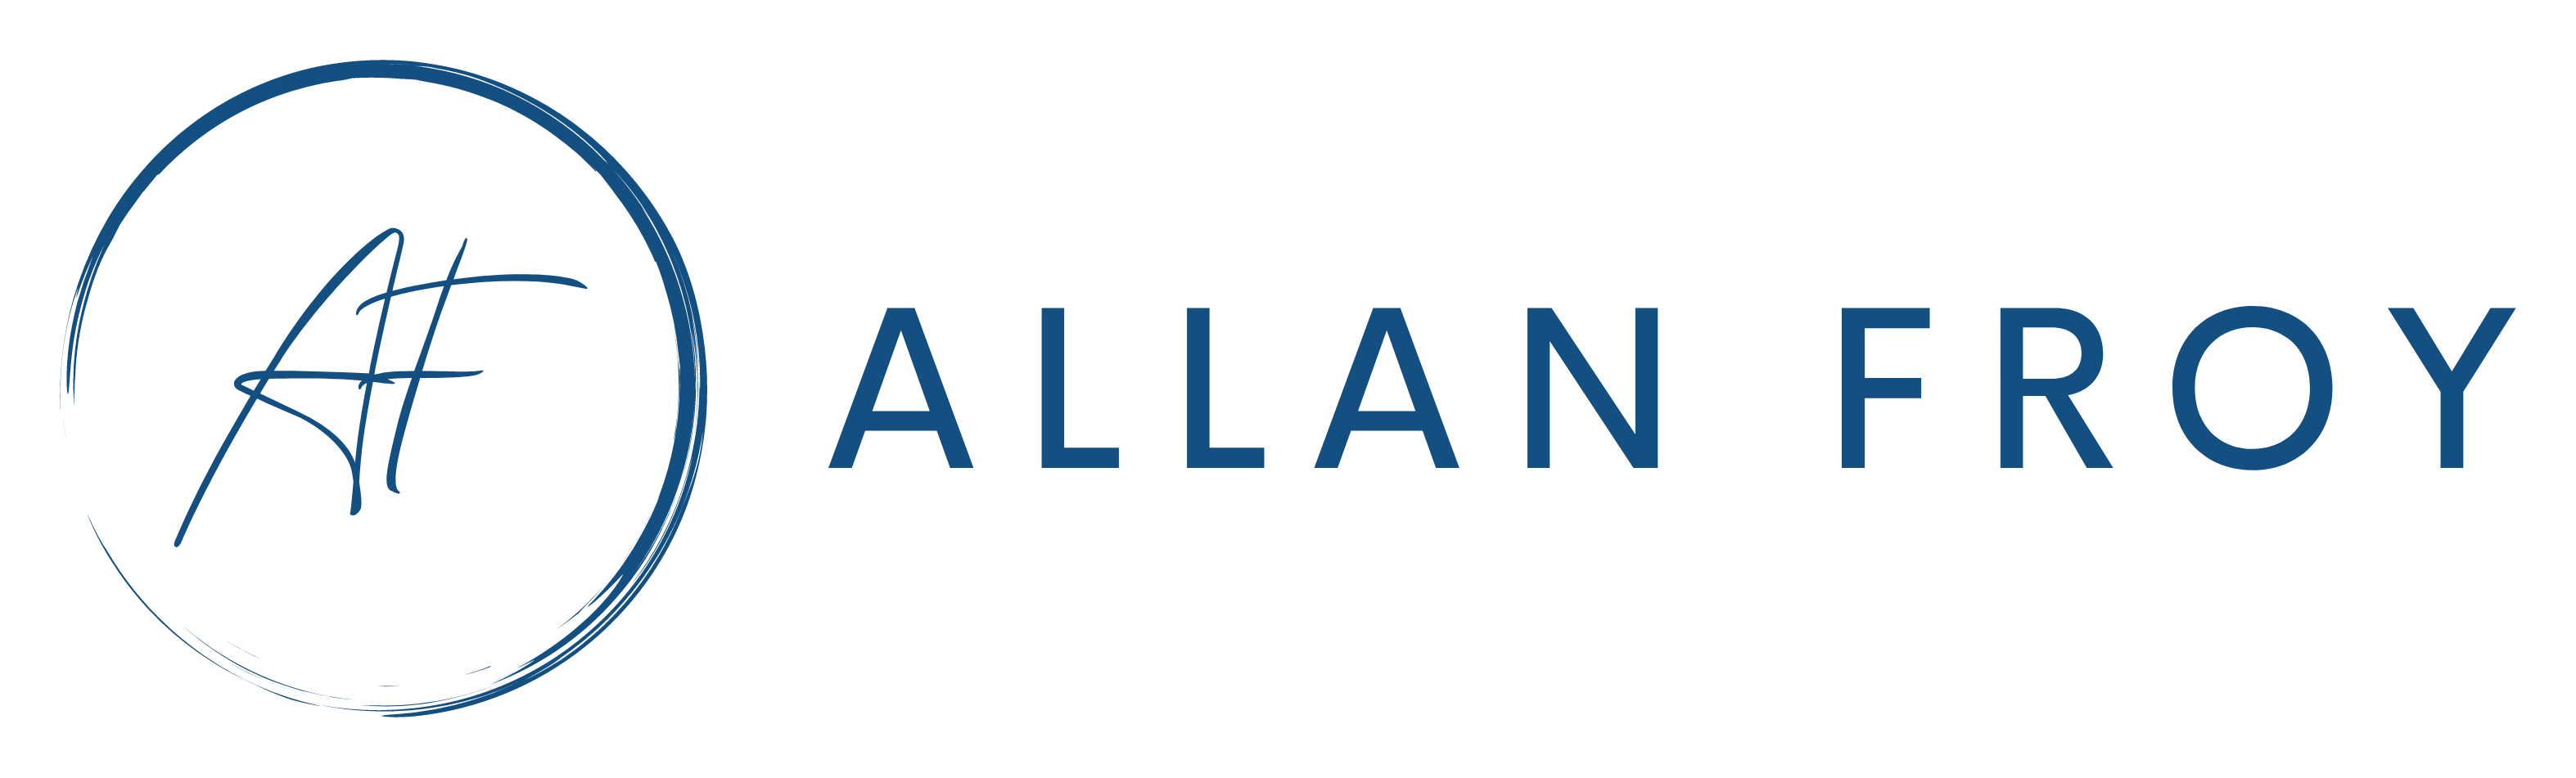 Allan Froy logo